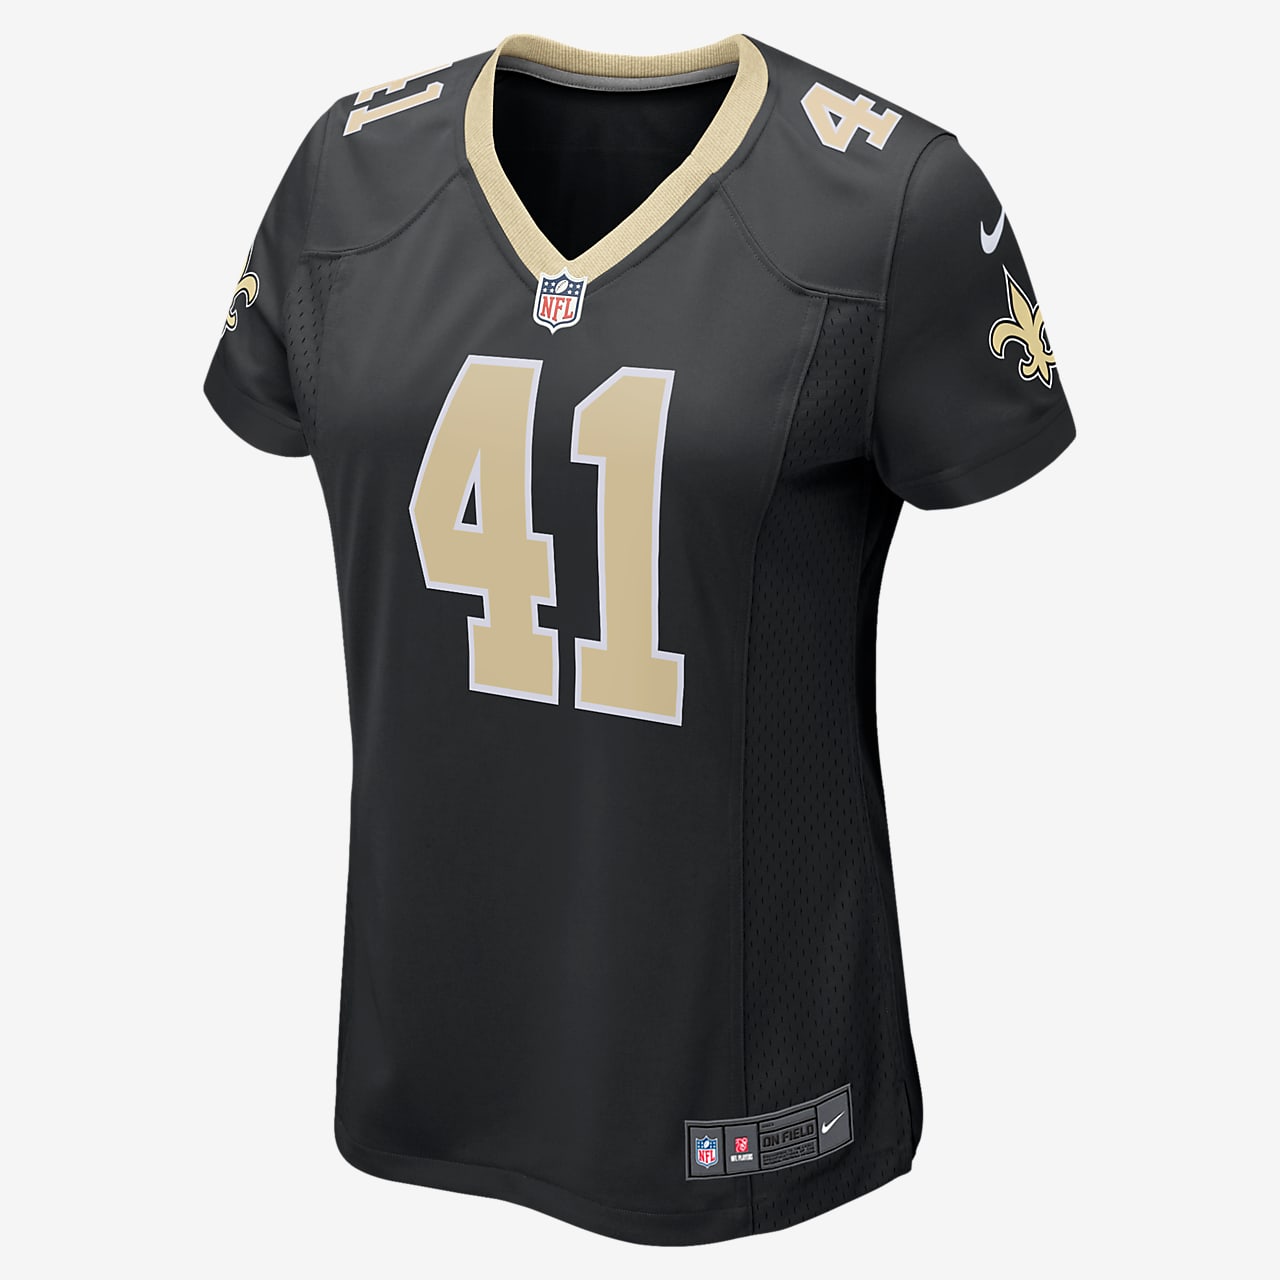 Atajos silencio Final Camiseta de fútbol americano para mujer NFL New Orleans Saints Game. Nike .com